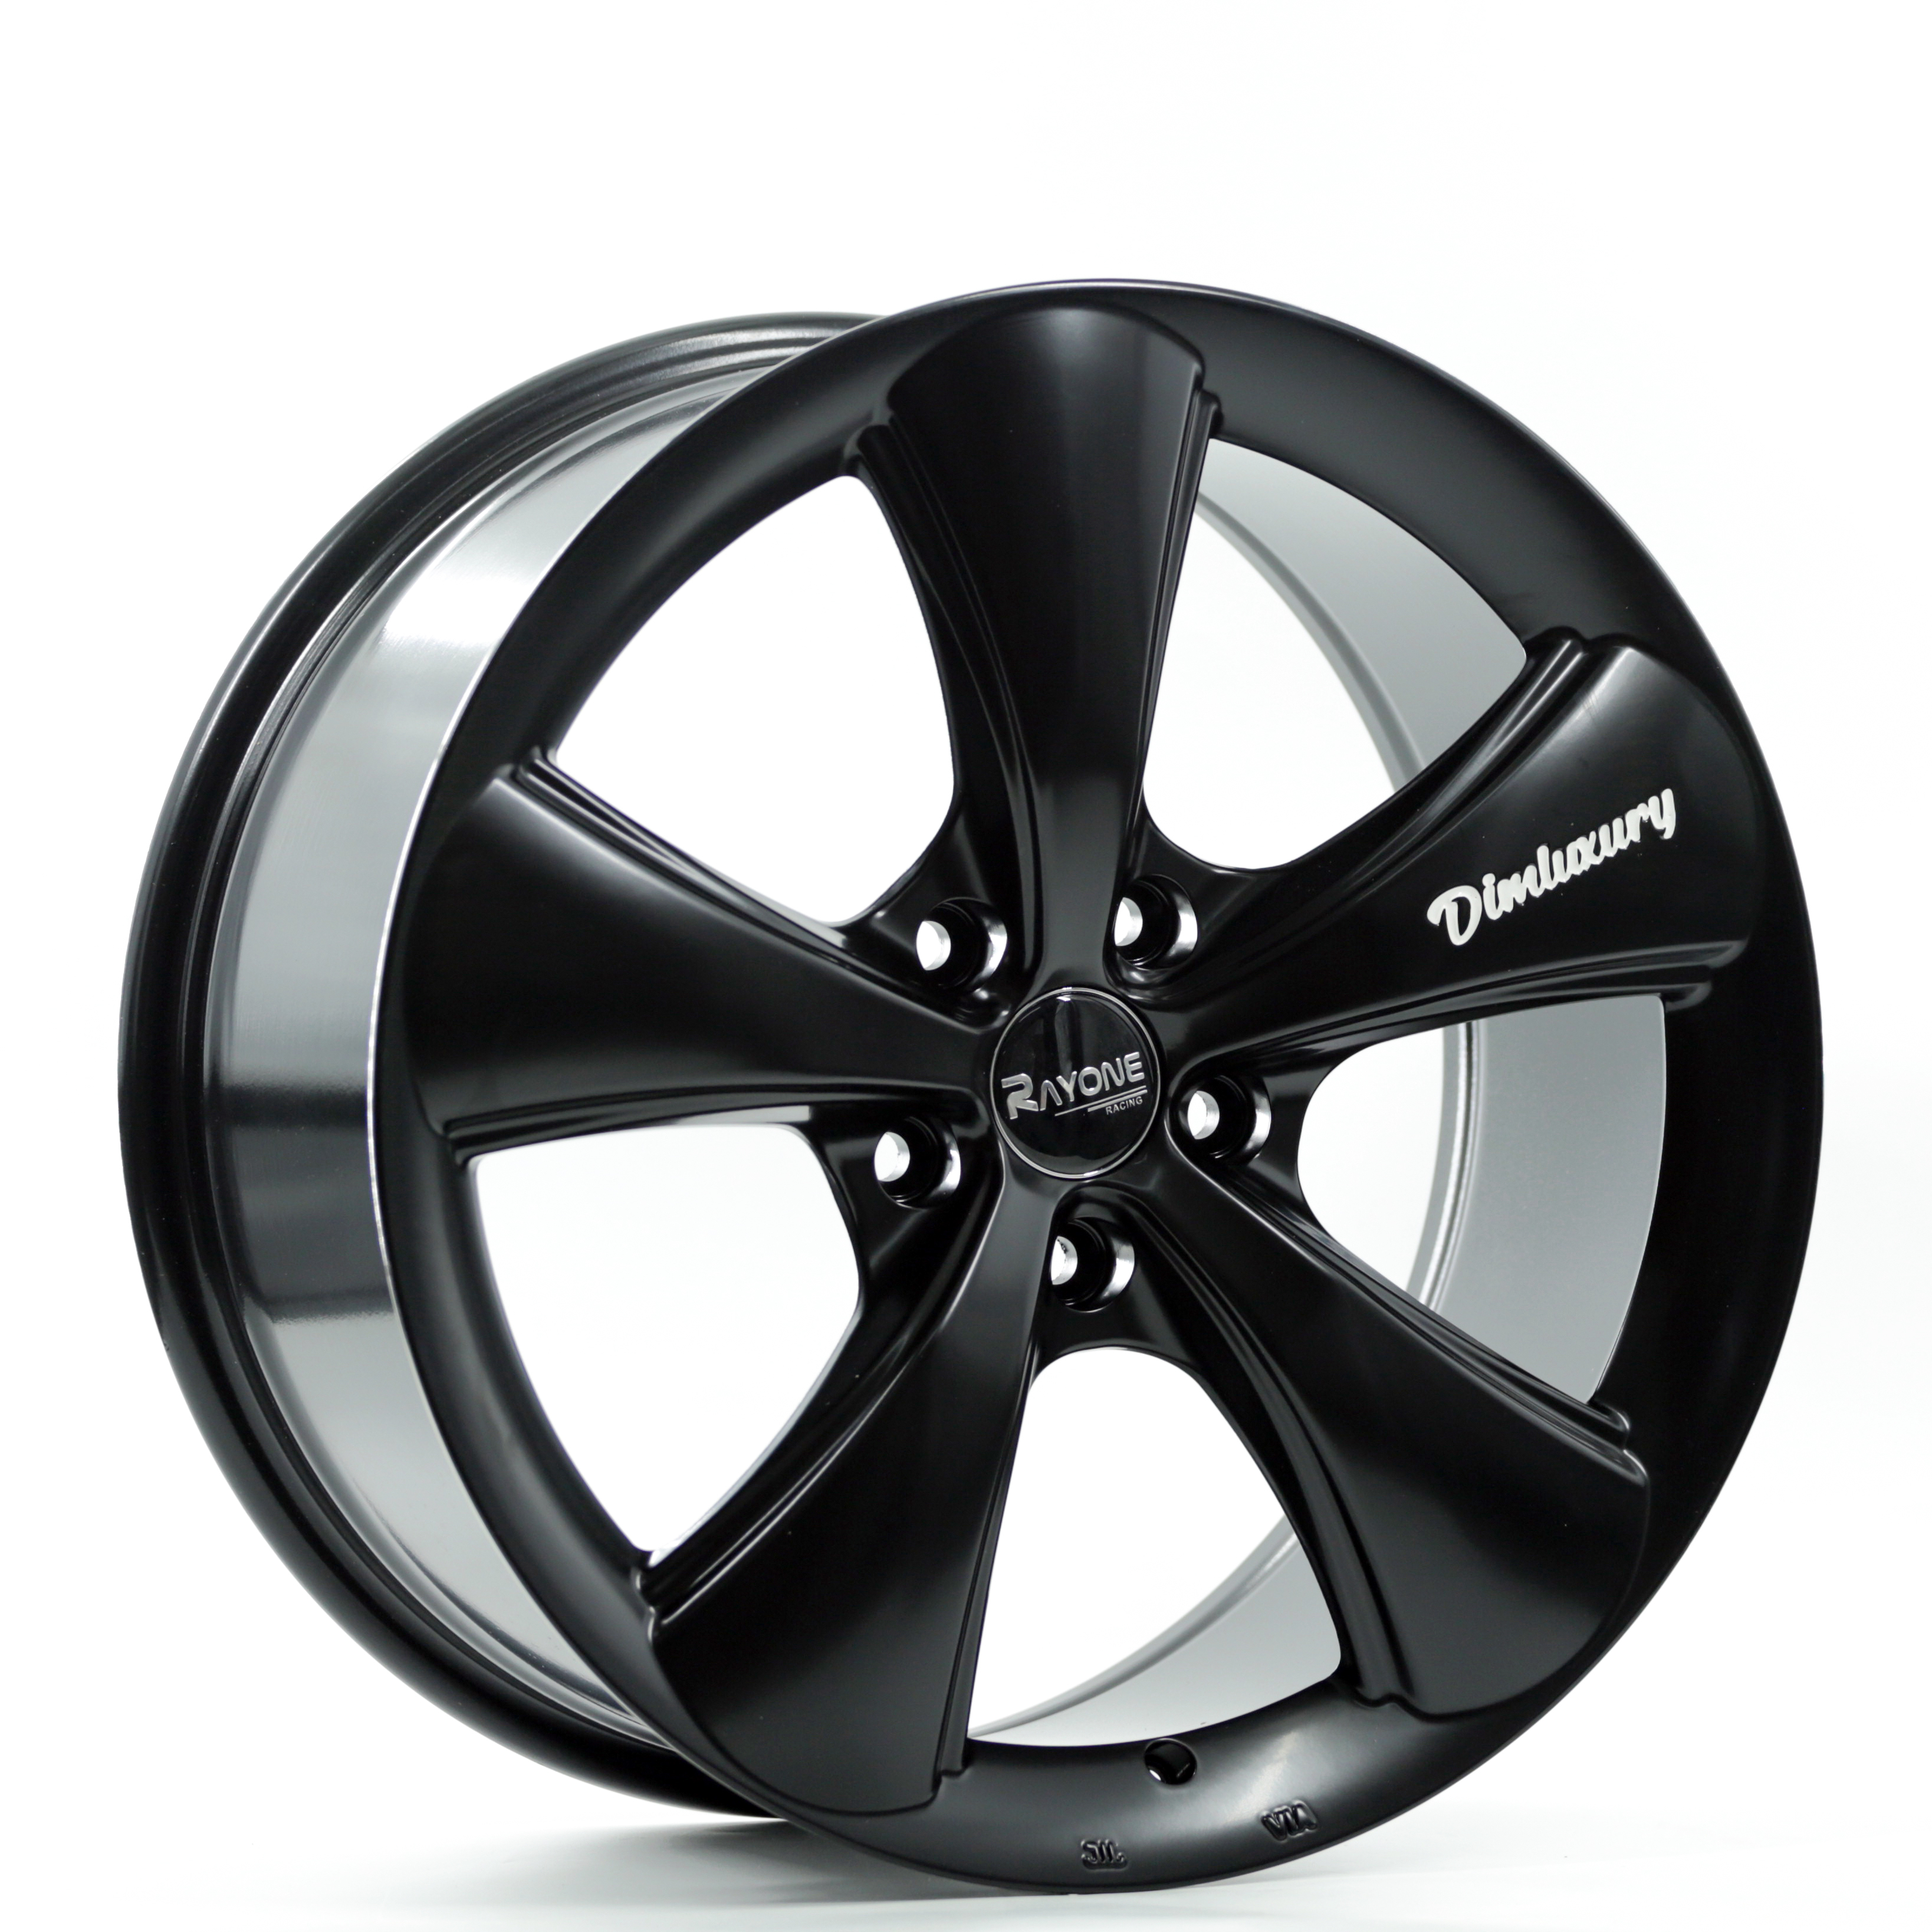 2021 New Style 5 Slot Mag Wheels - Rayone China Alloy Wheels Factory 18/19inch For Racing Car – Rayone